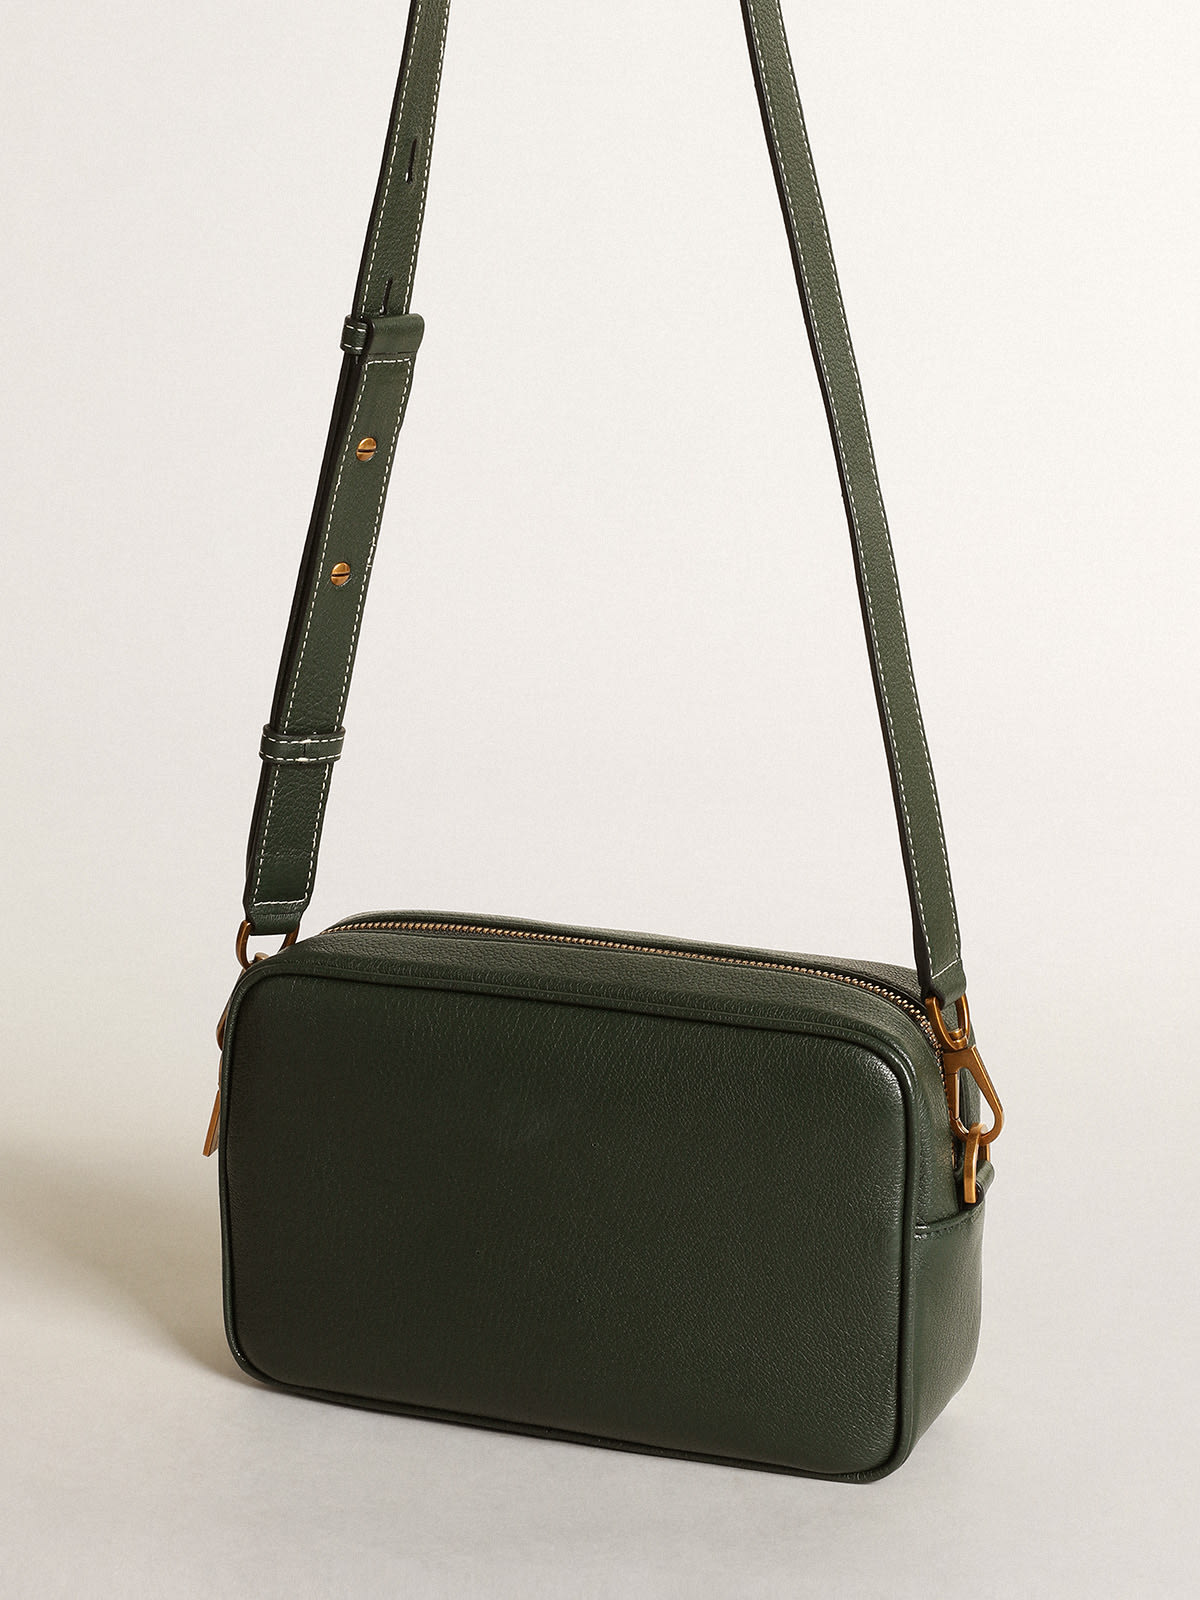 Golden Goose - Borsa Star Bag in pelle color verde scuro con stella ton sur ton in 